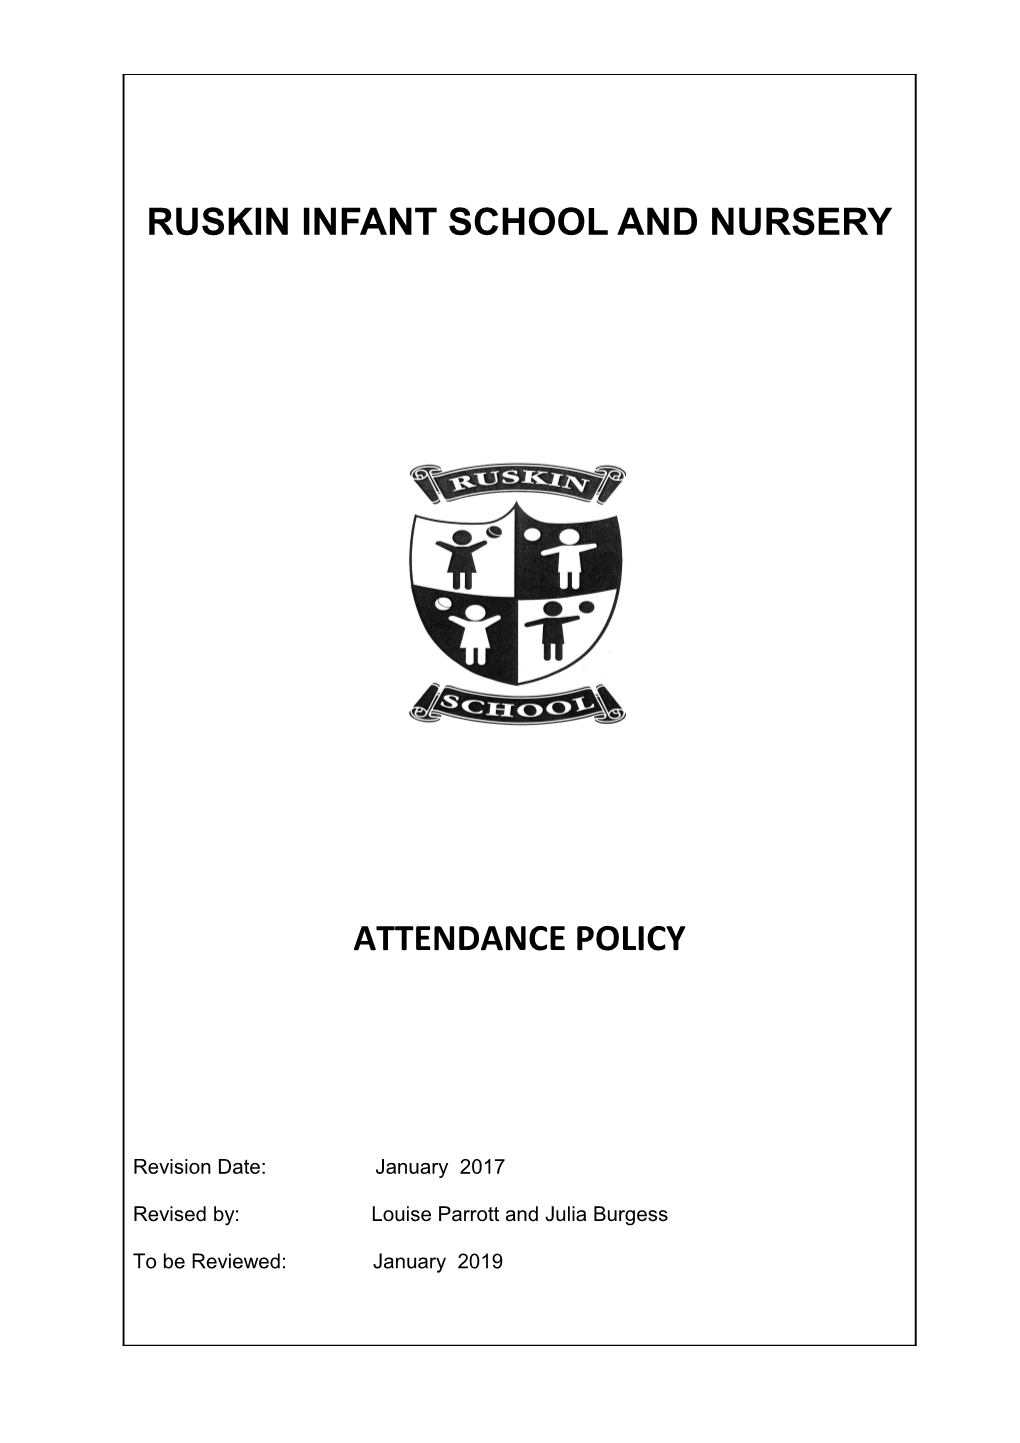 Ruskin Infant School and Nursery